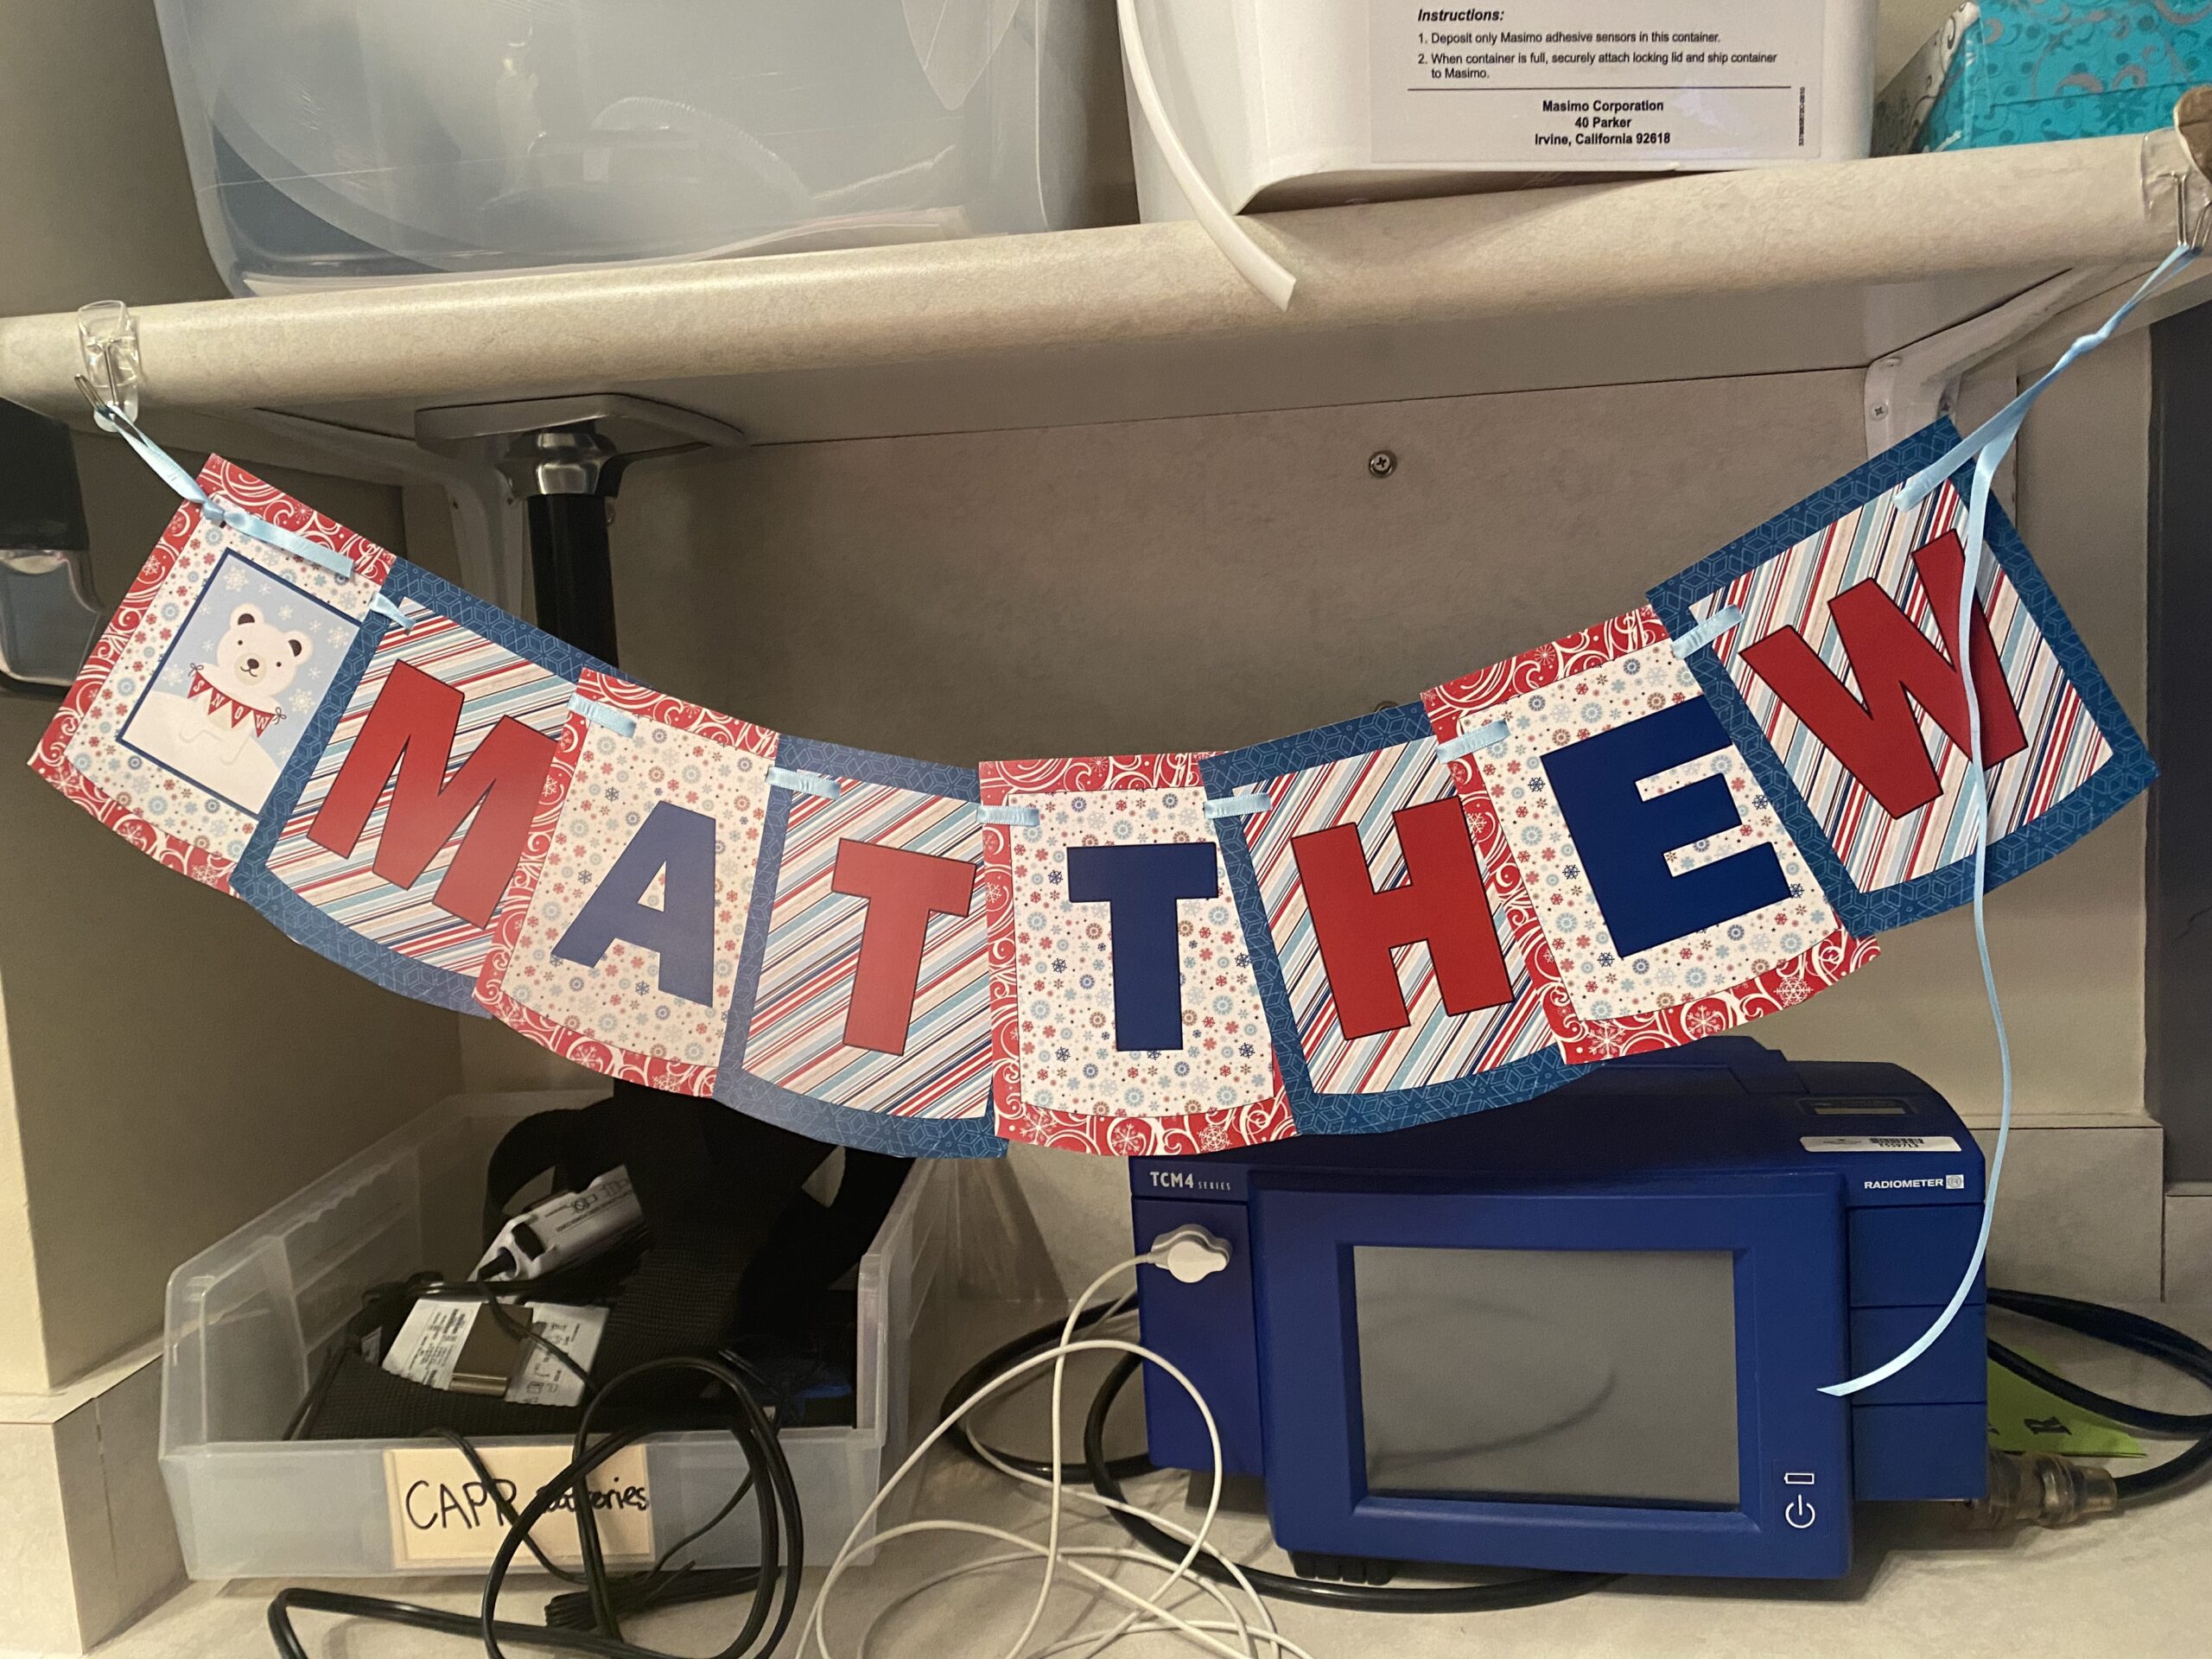 Matthew’s Name